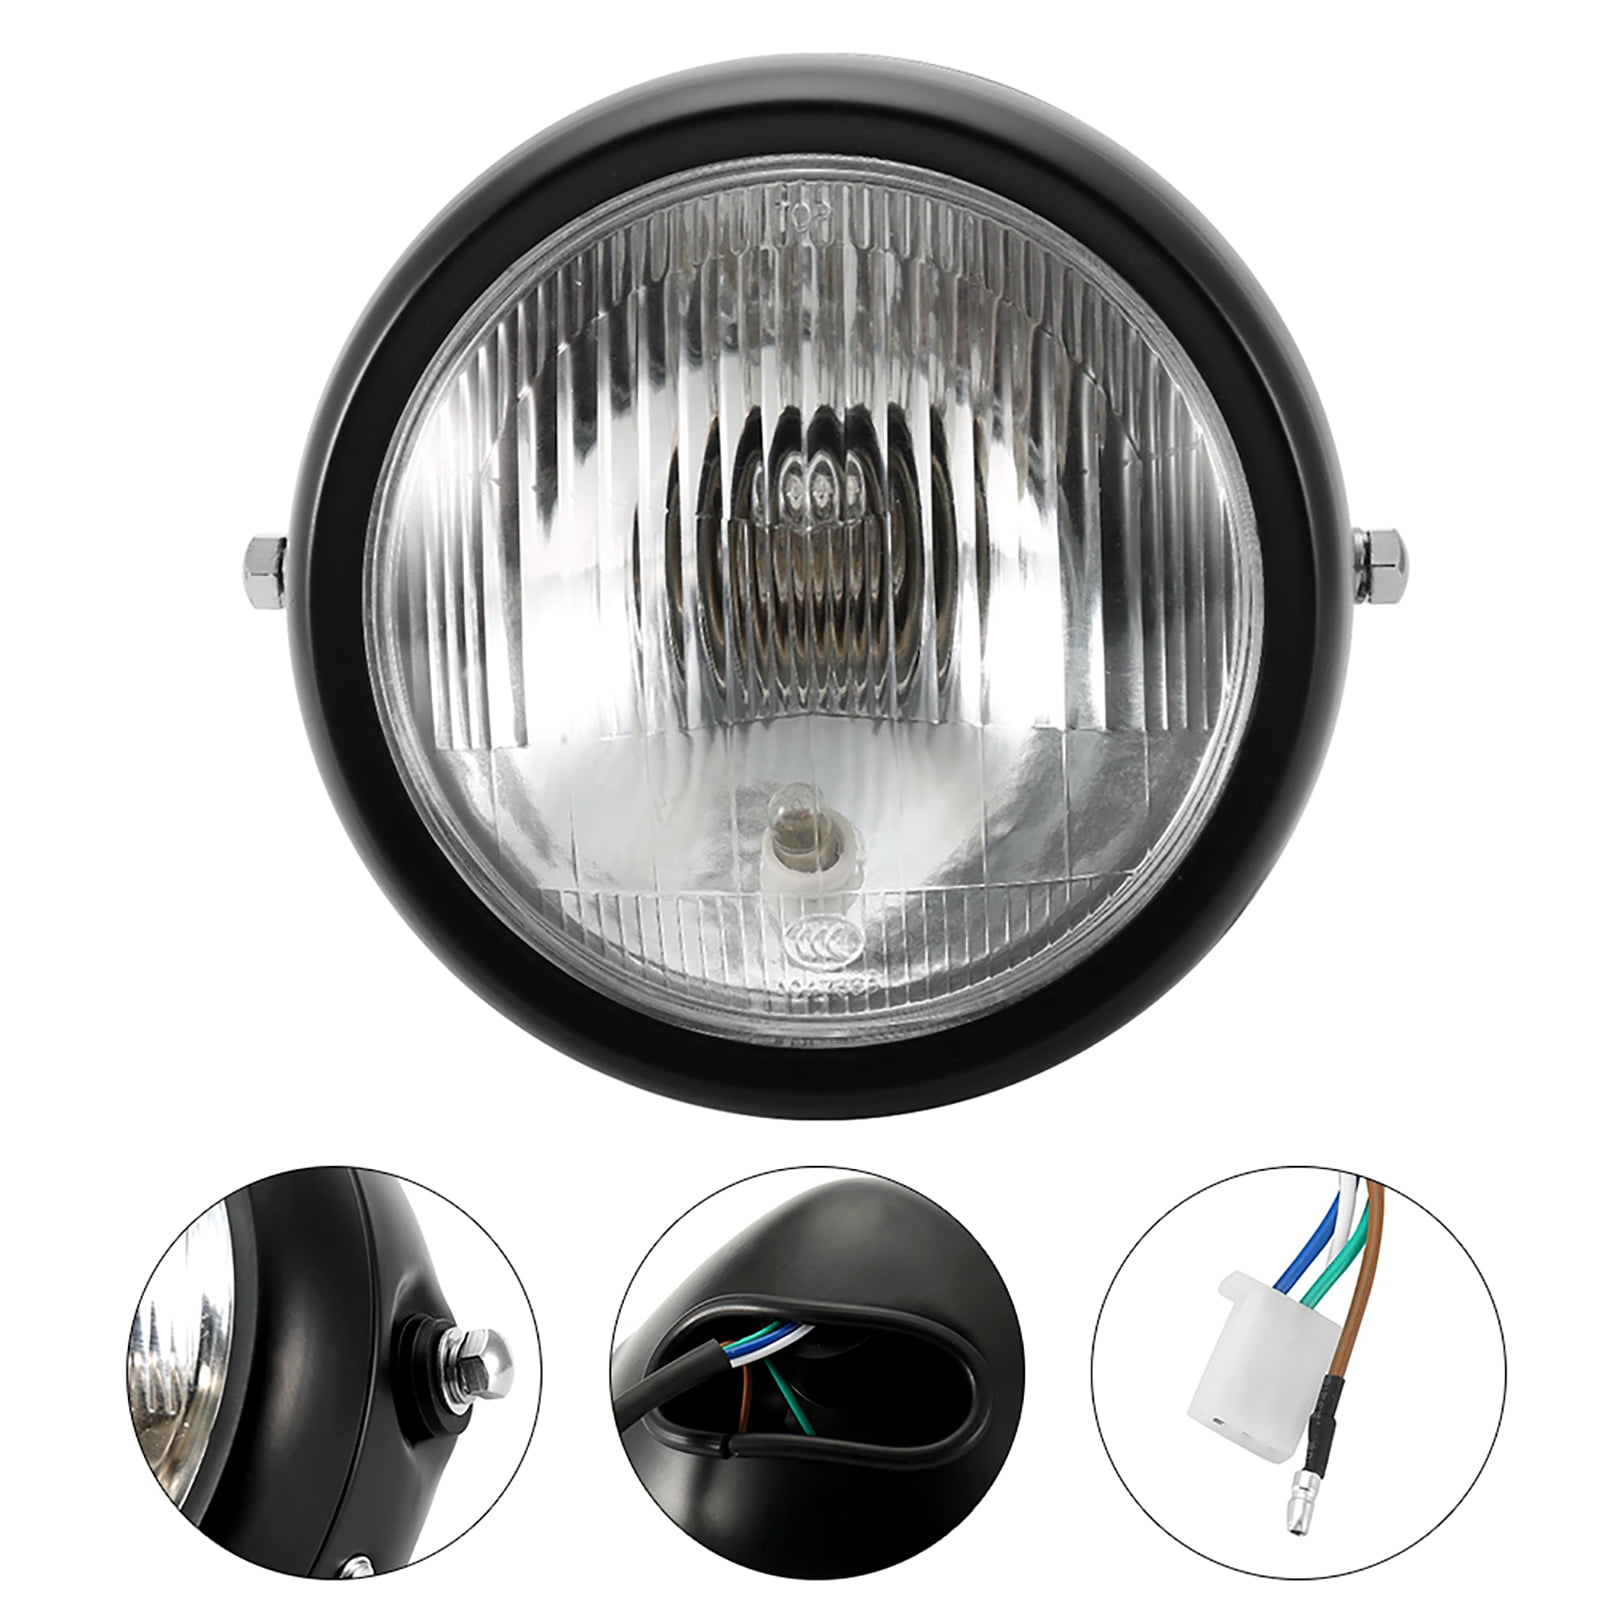 LED Headlight, Metal Shell & Glass 35W LED Motorcycle Bulb, Headlight For Motorcycle - Walmart.com